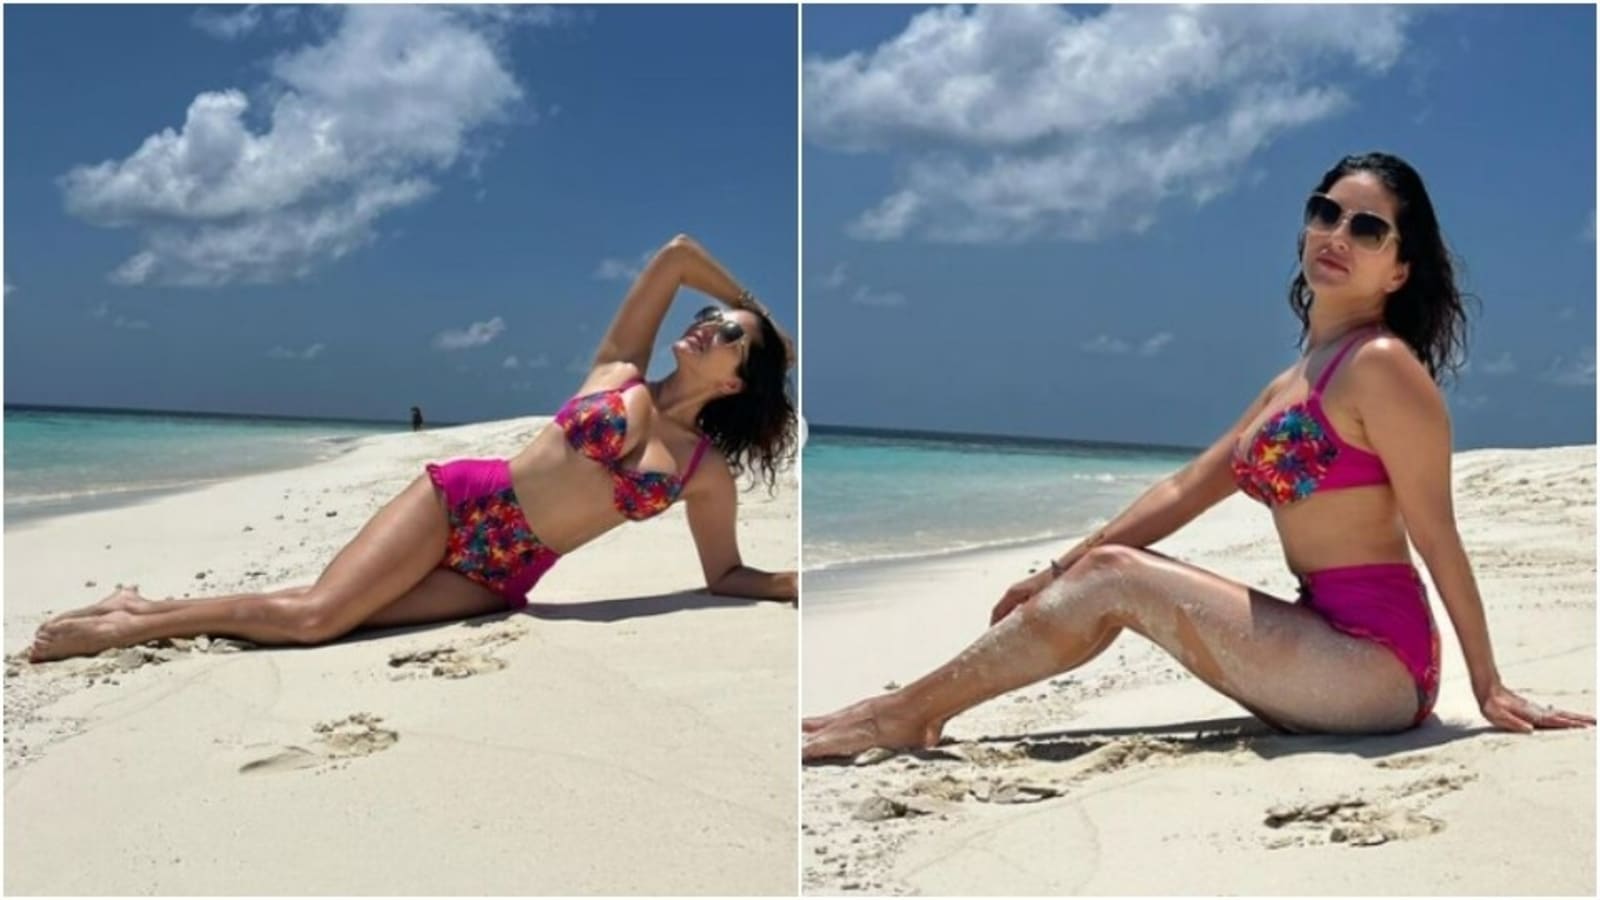 Sunny Leone’s bikini diaries in Maldives with sand and sea